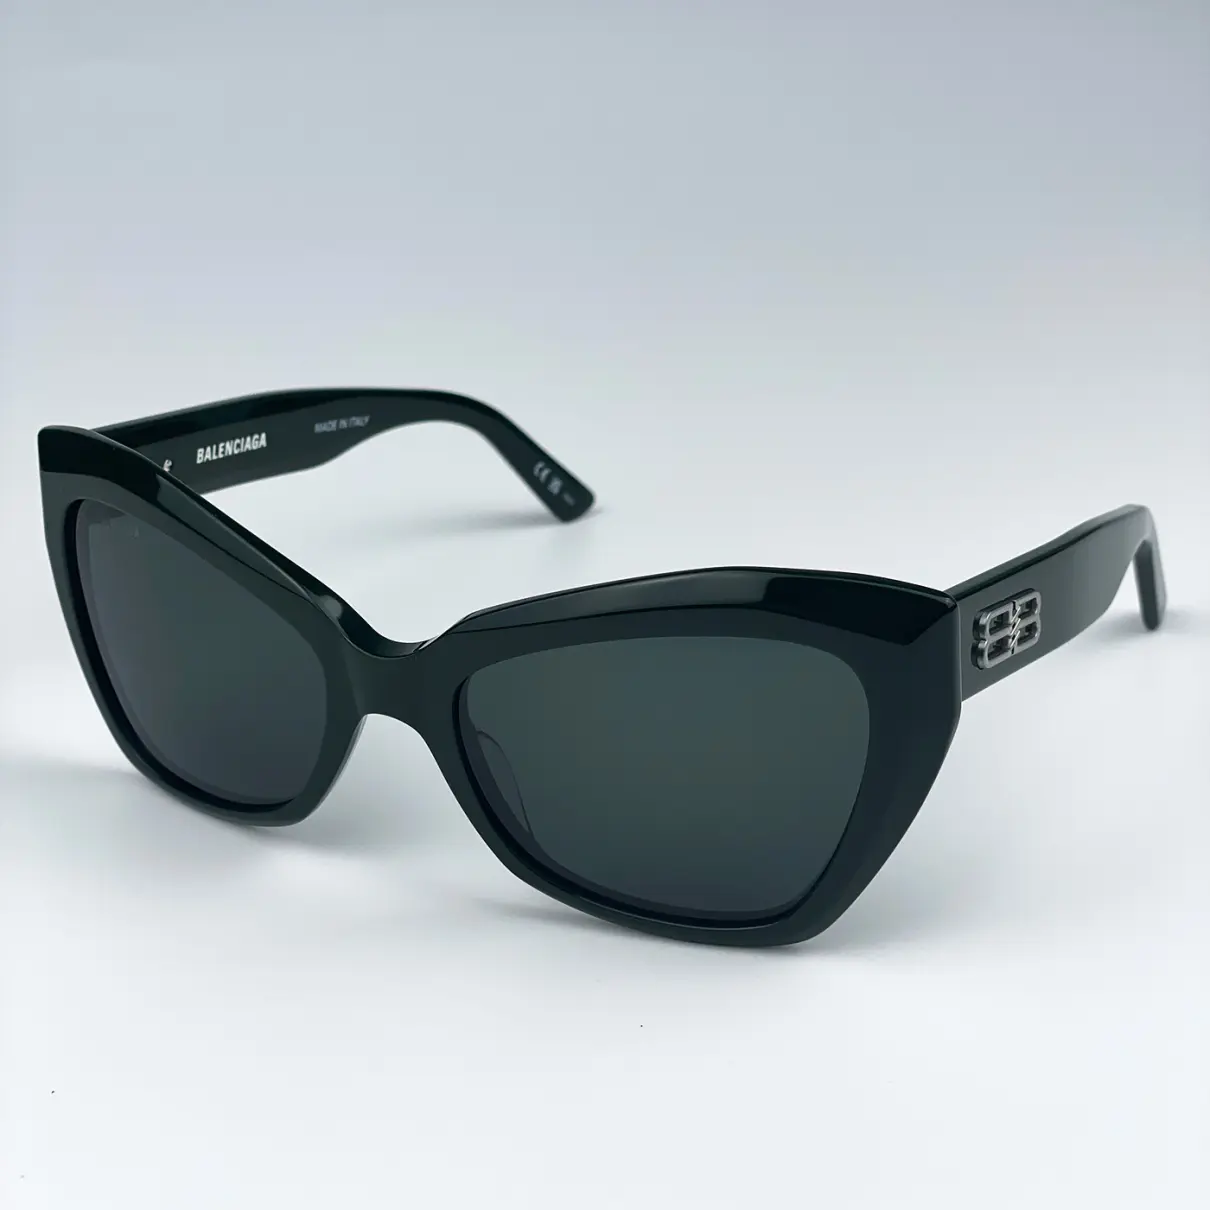 Buy Balenciaga Oversized sunglasses online